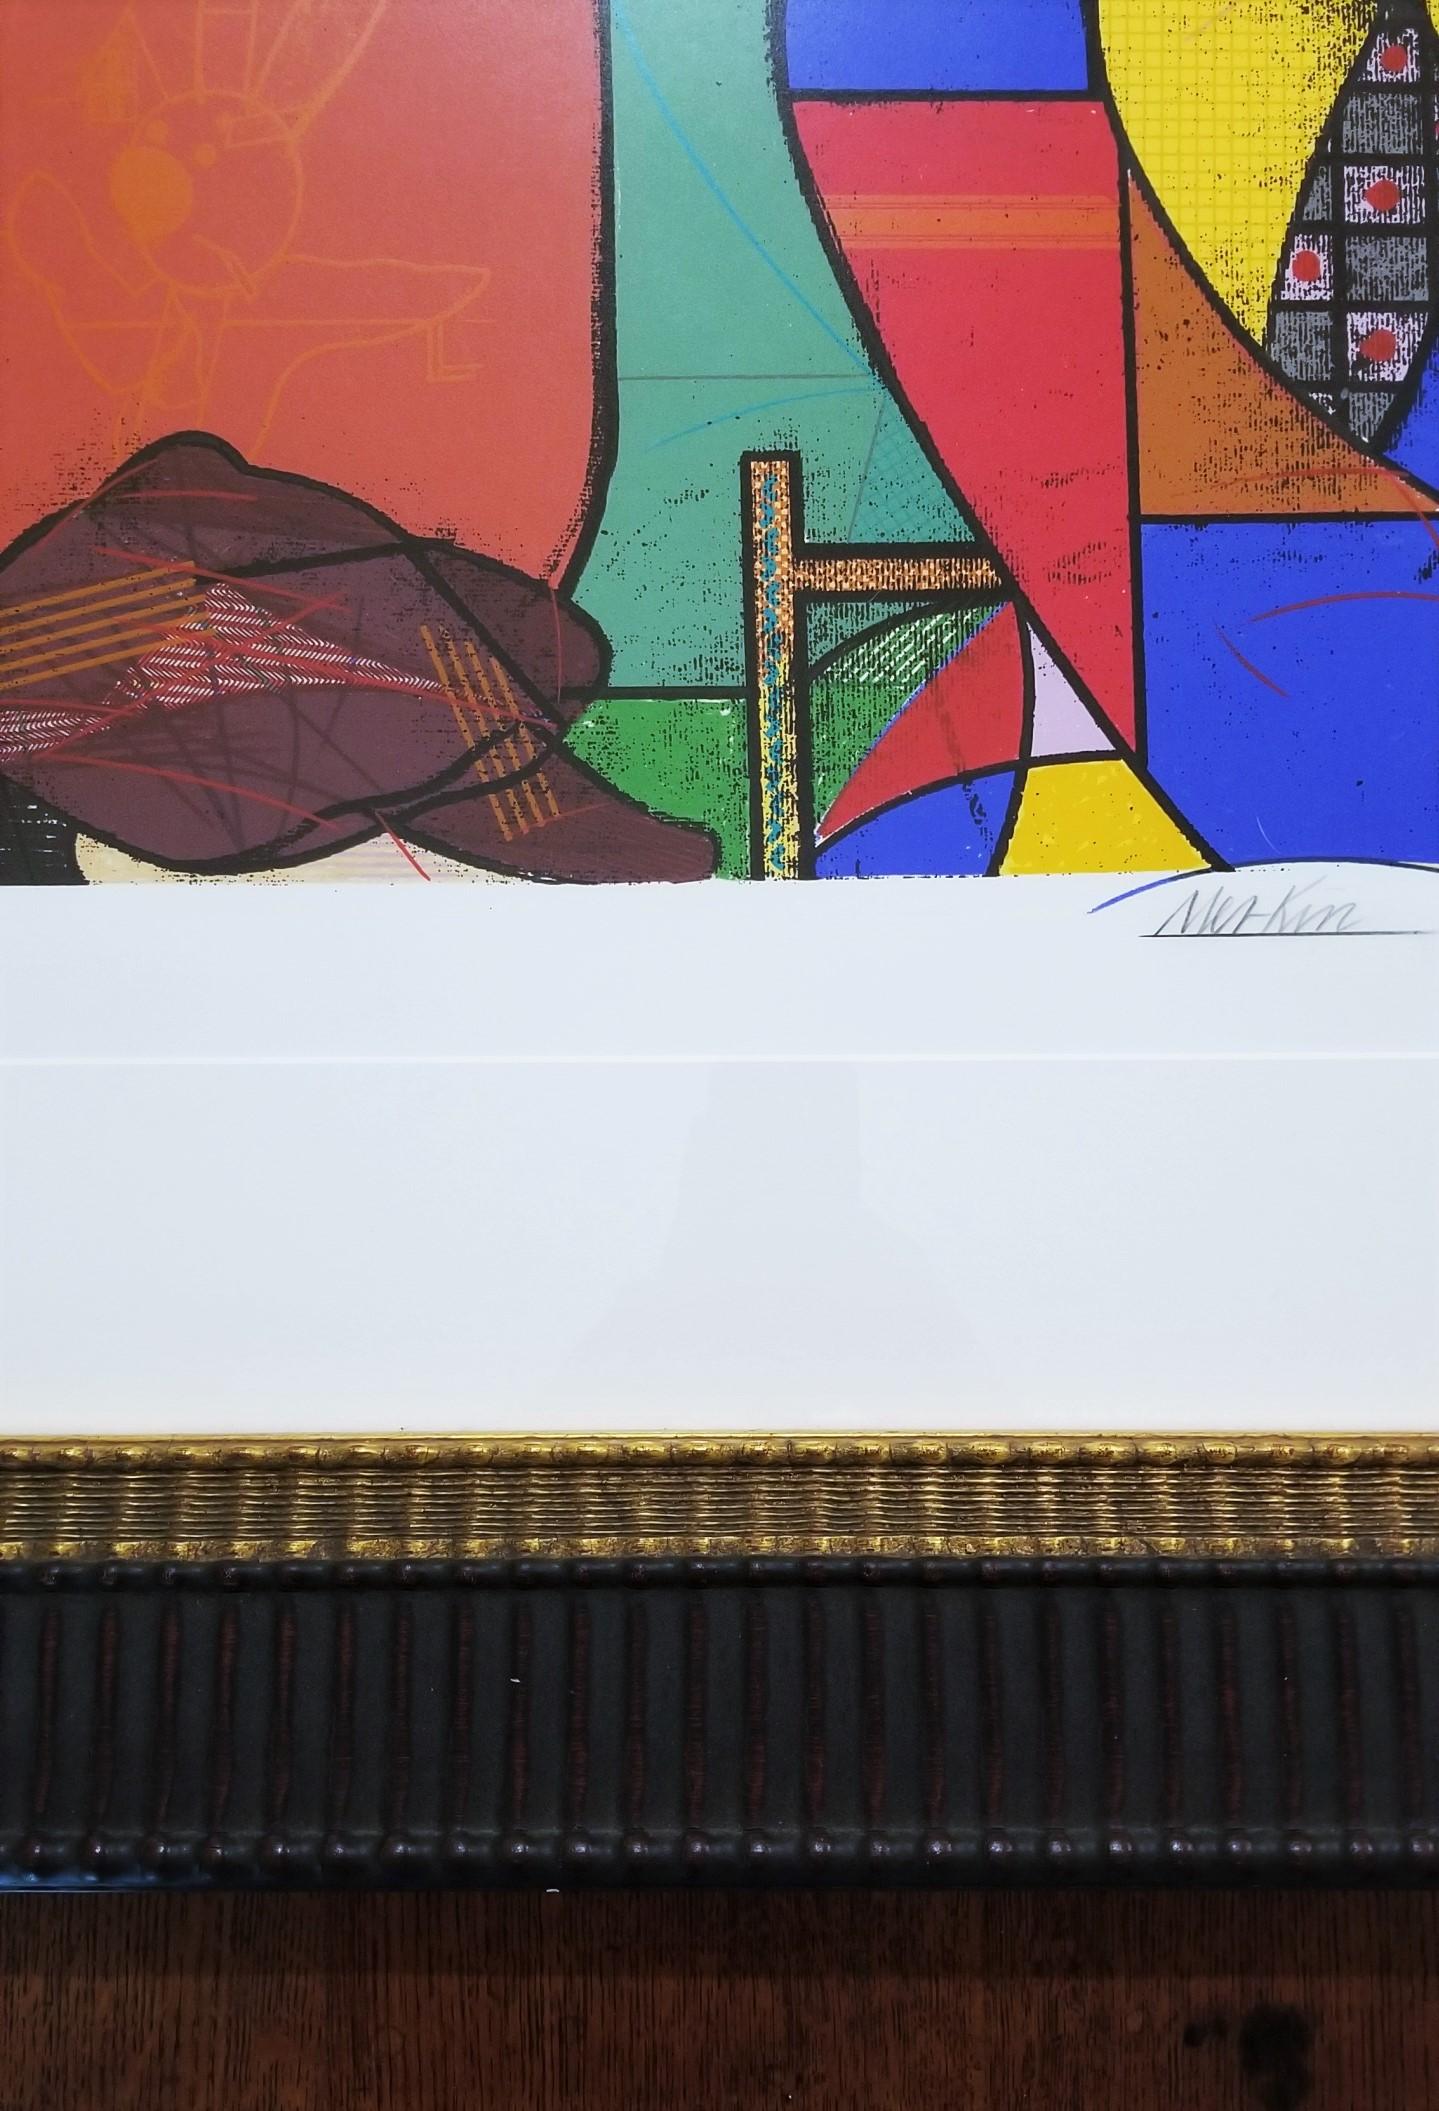 An original signed screenprint on Arches paper by American artist Richard Merkin (1938-2009) titled 